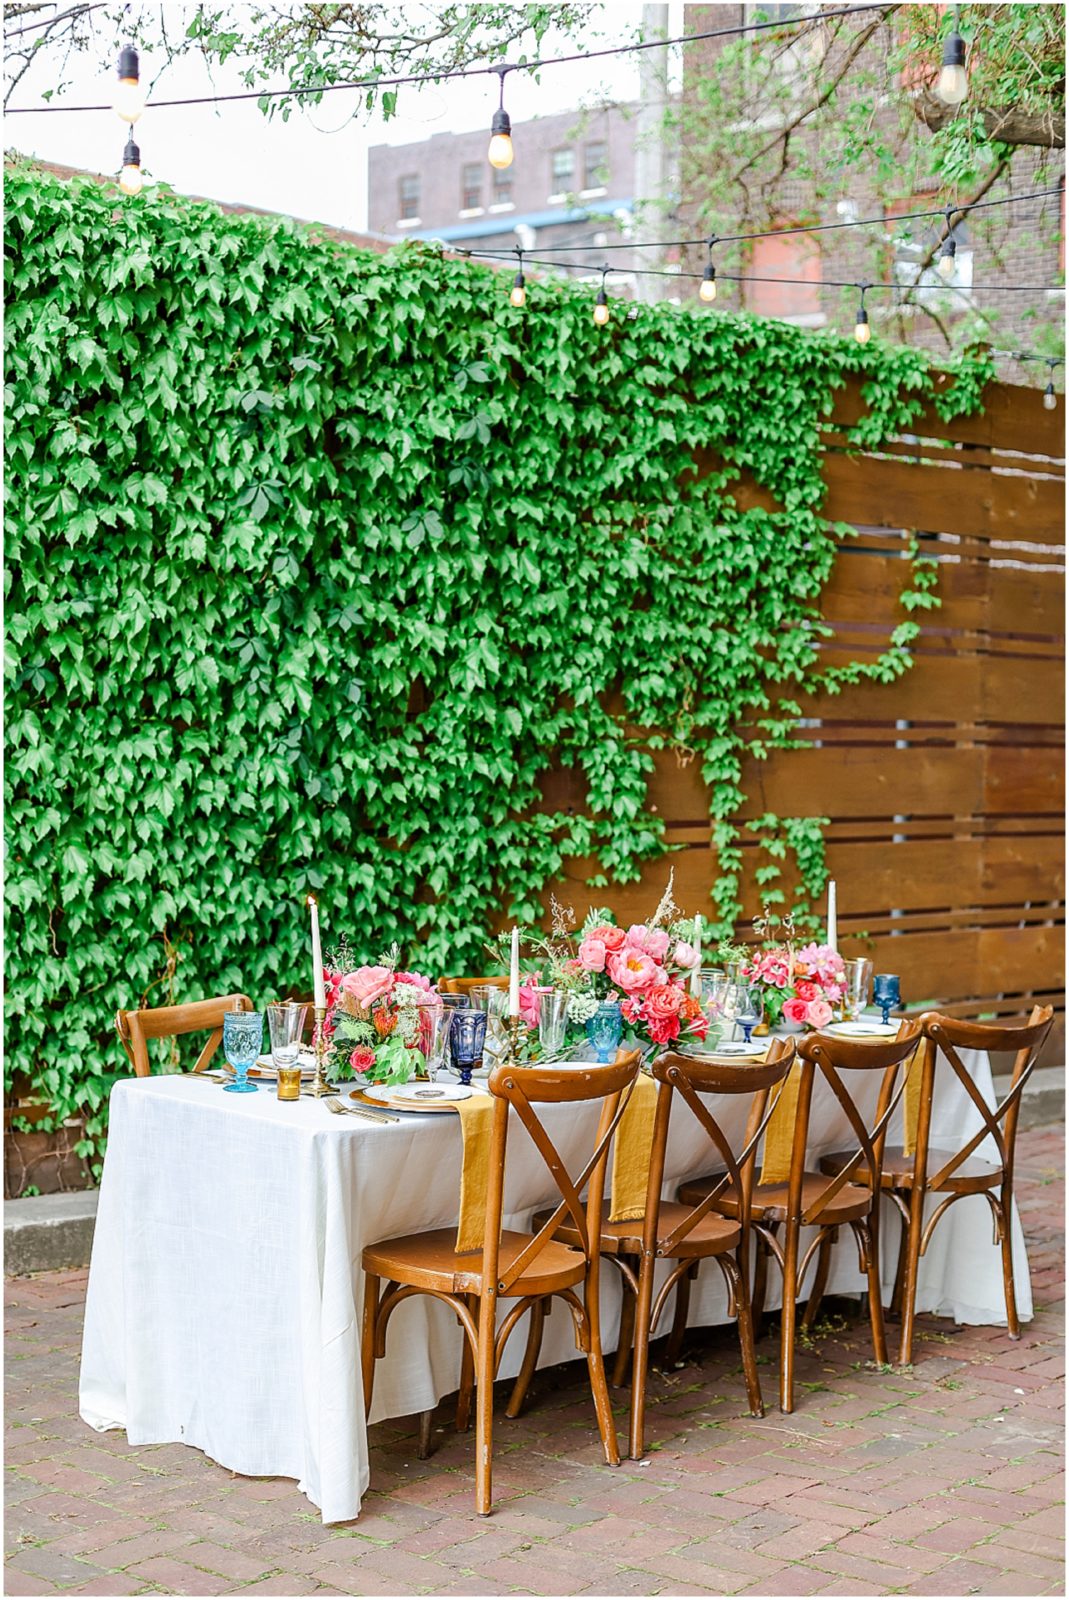 outdoor wedding - feasts of fancy - kansas city wedding - kc floral house - mariam saifan photography - spanish styled shoot - wedding inspiration - colorful wedding photography